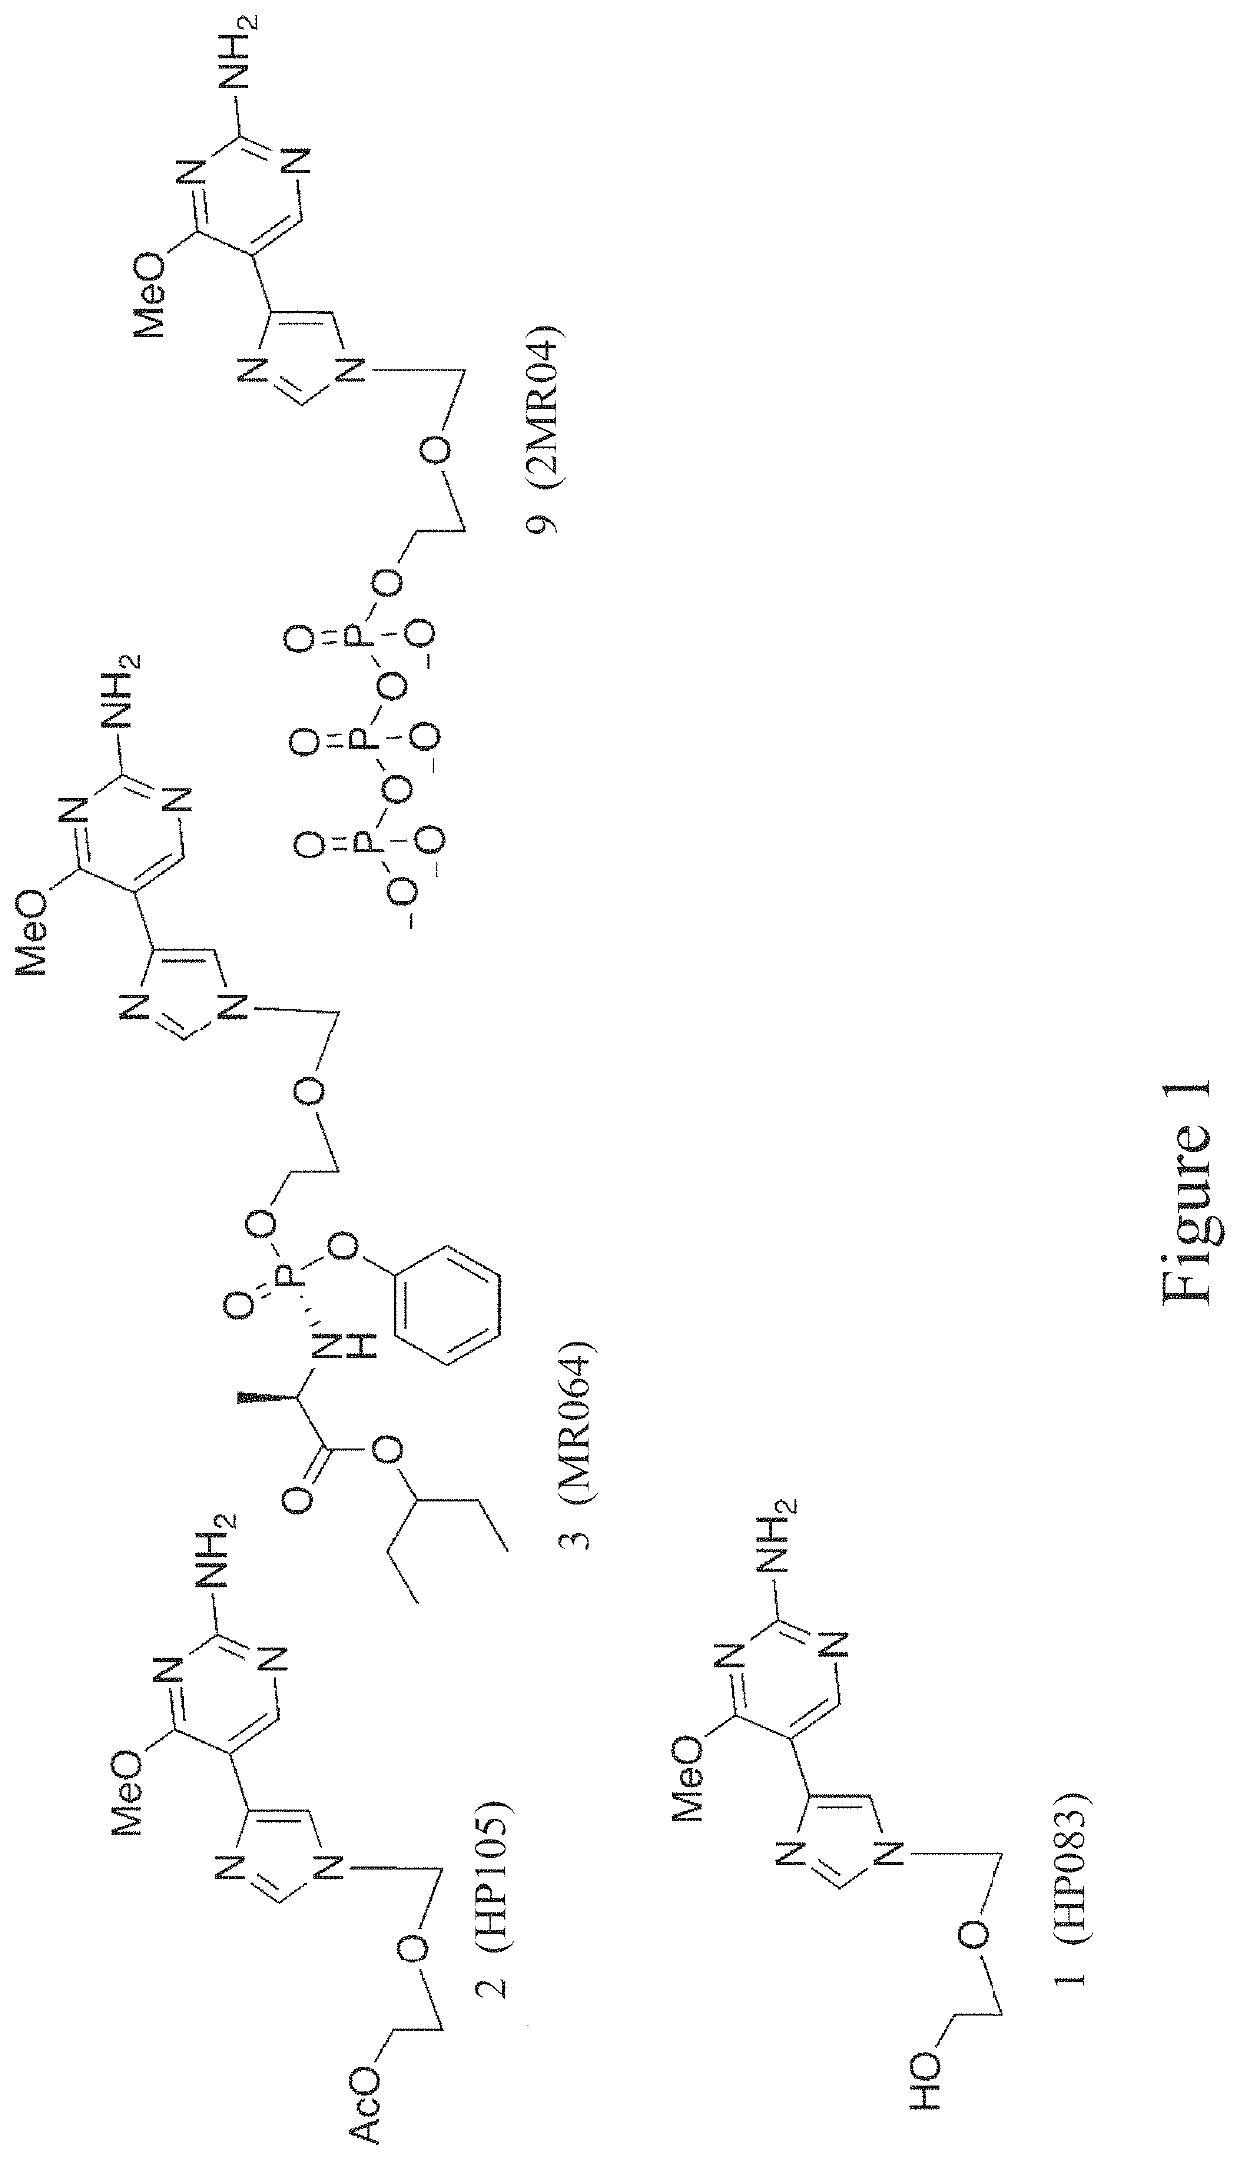 Flex-nucleoside analogues, novel therapeutics against filoviruses and flaviviruses